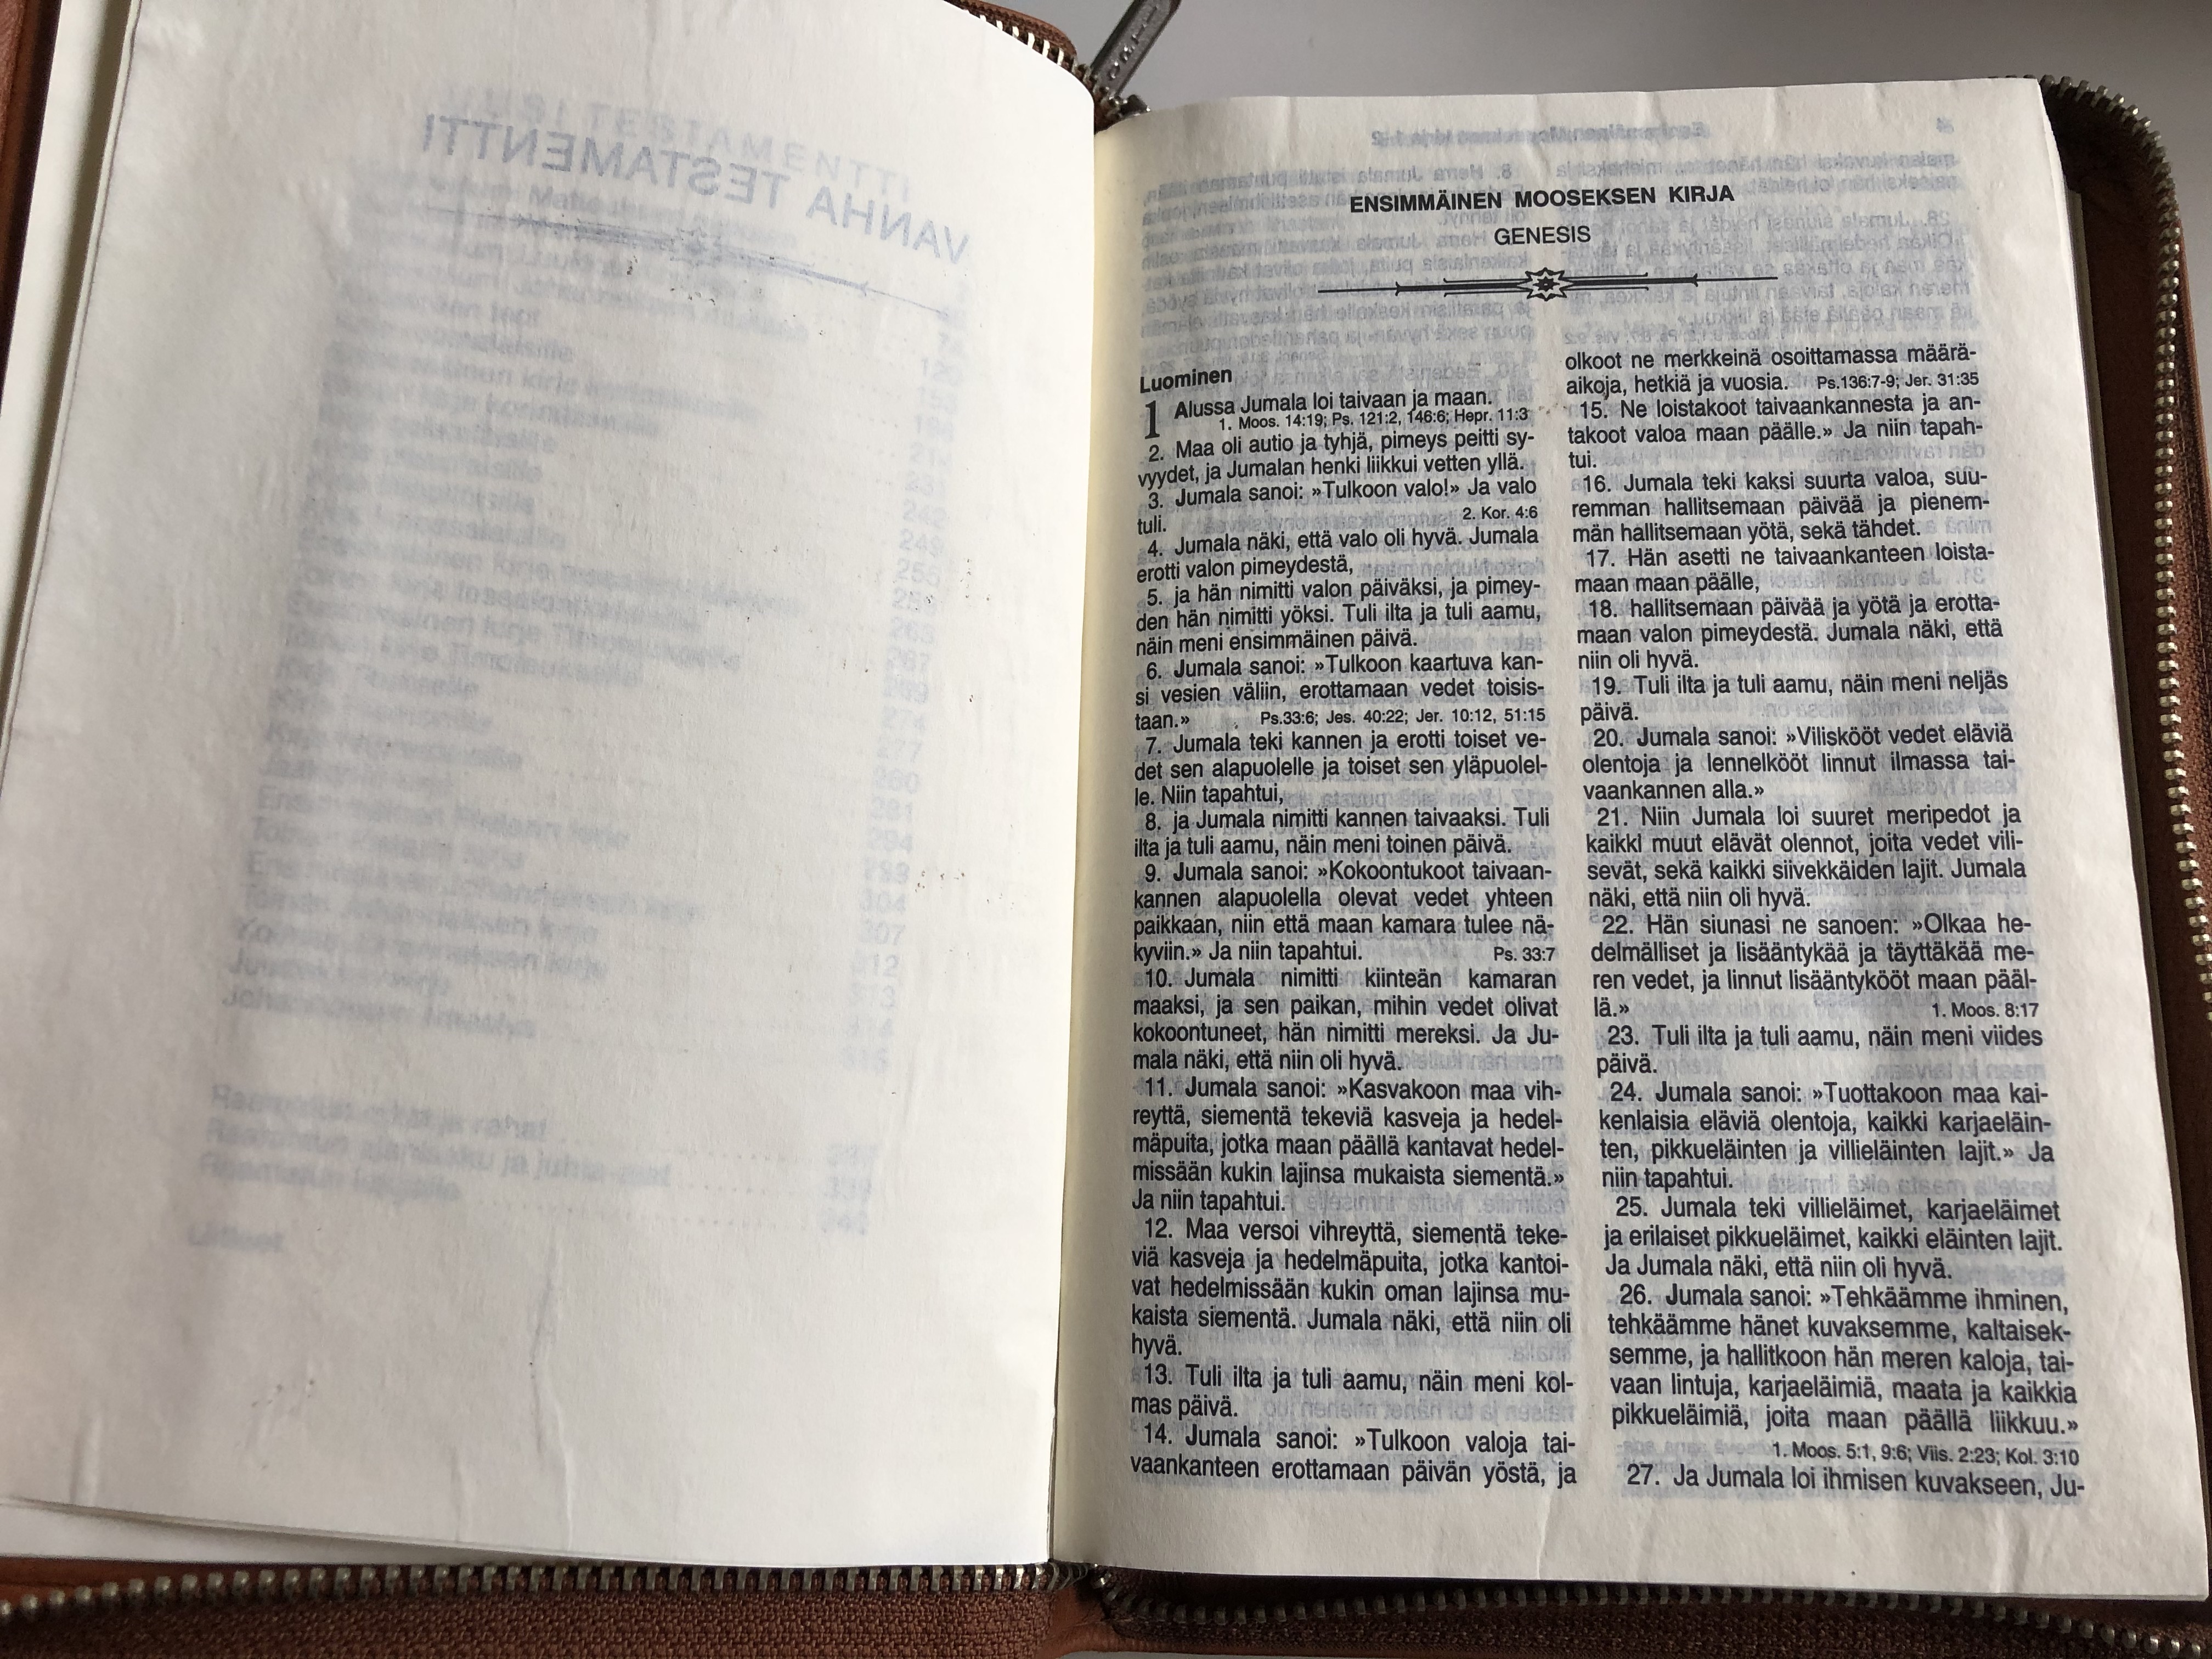 pyh-raamattu-finnish-language-brown-leather-bound-bible-10.jpg